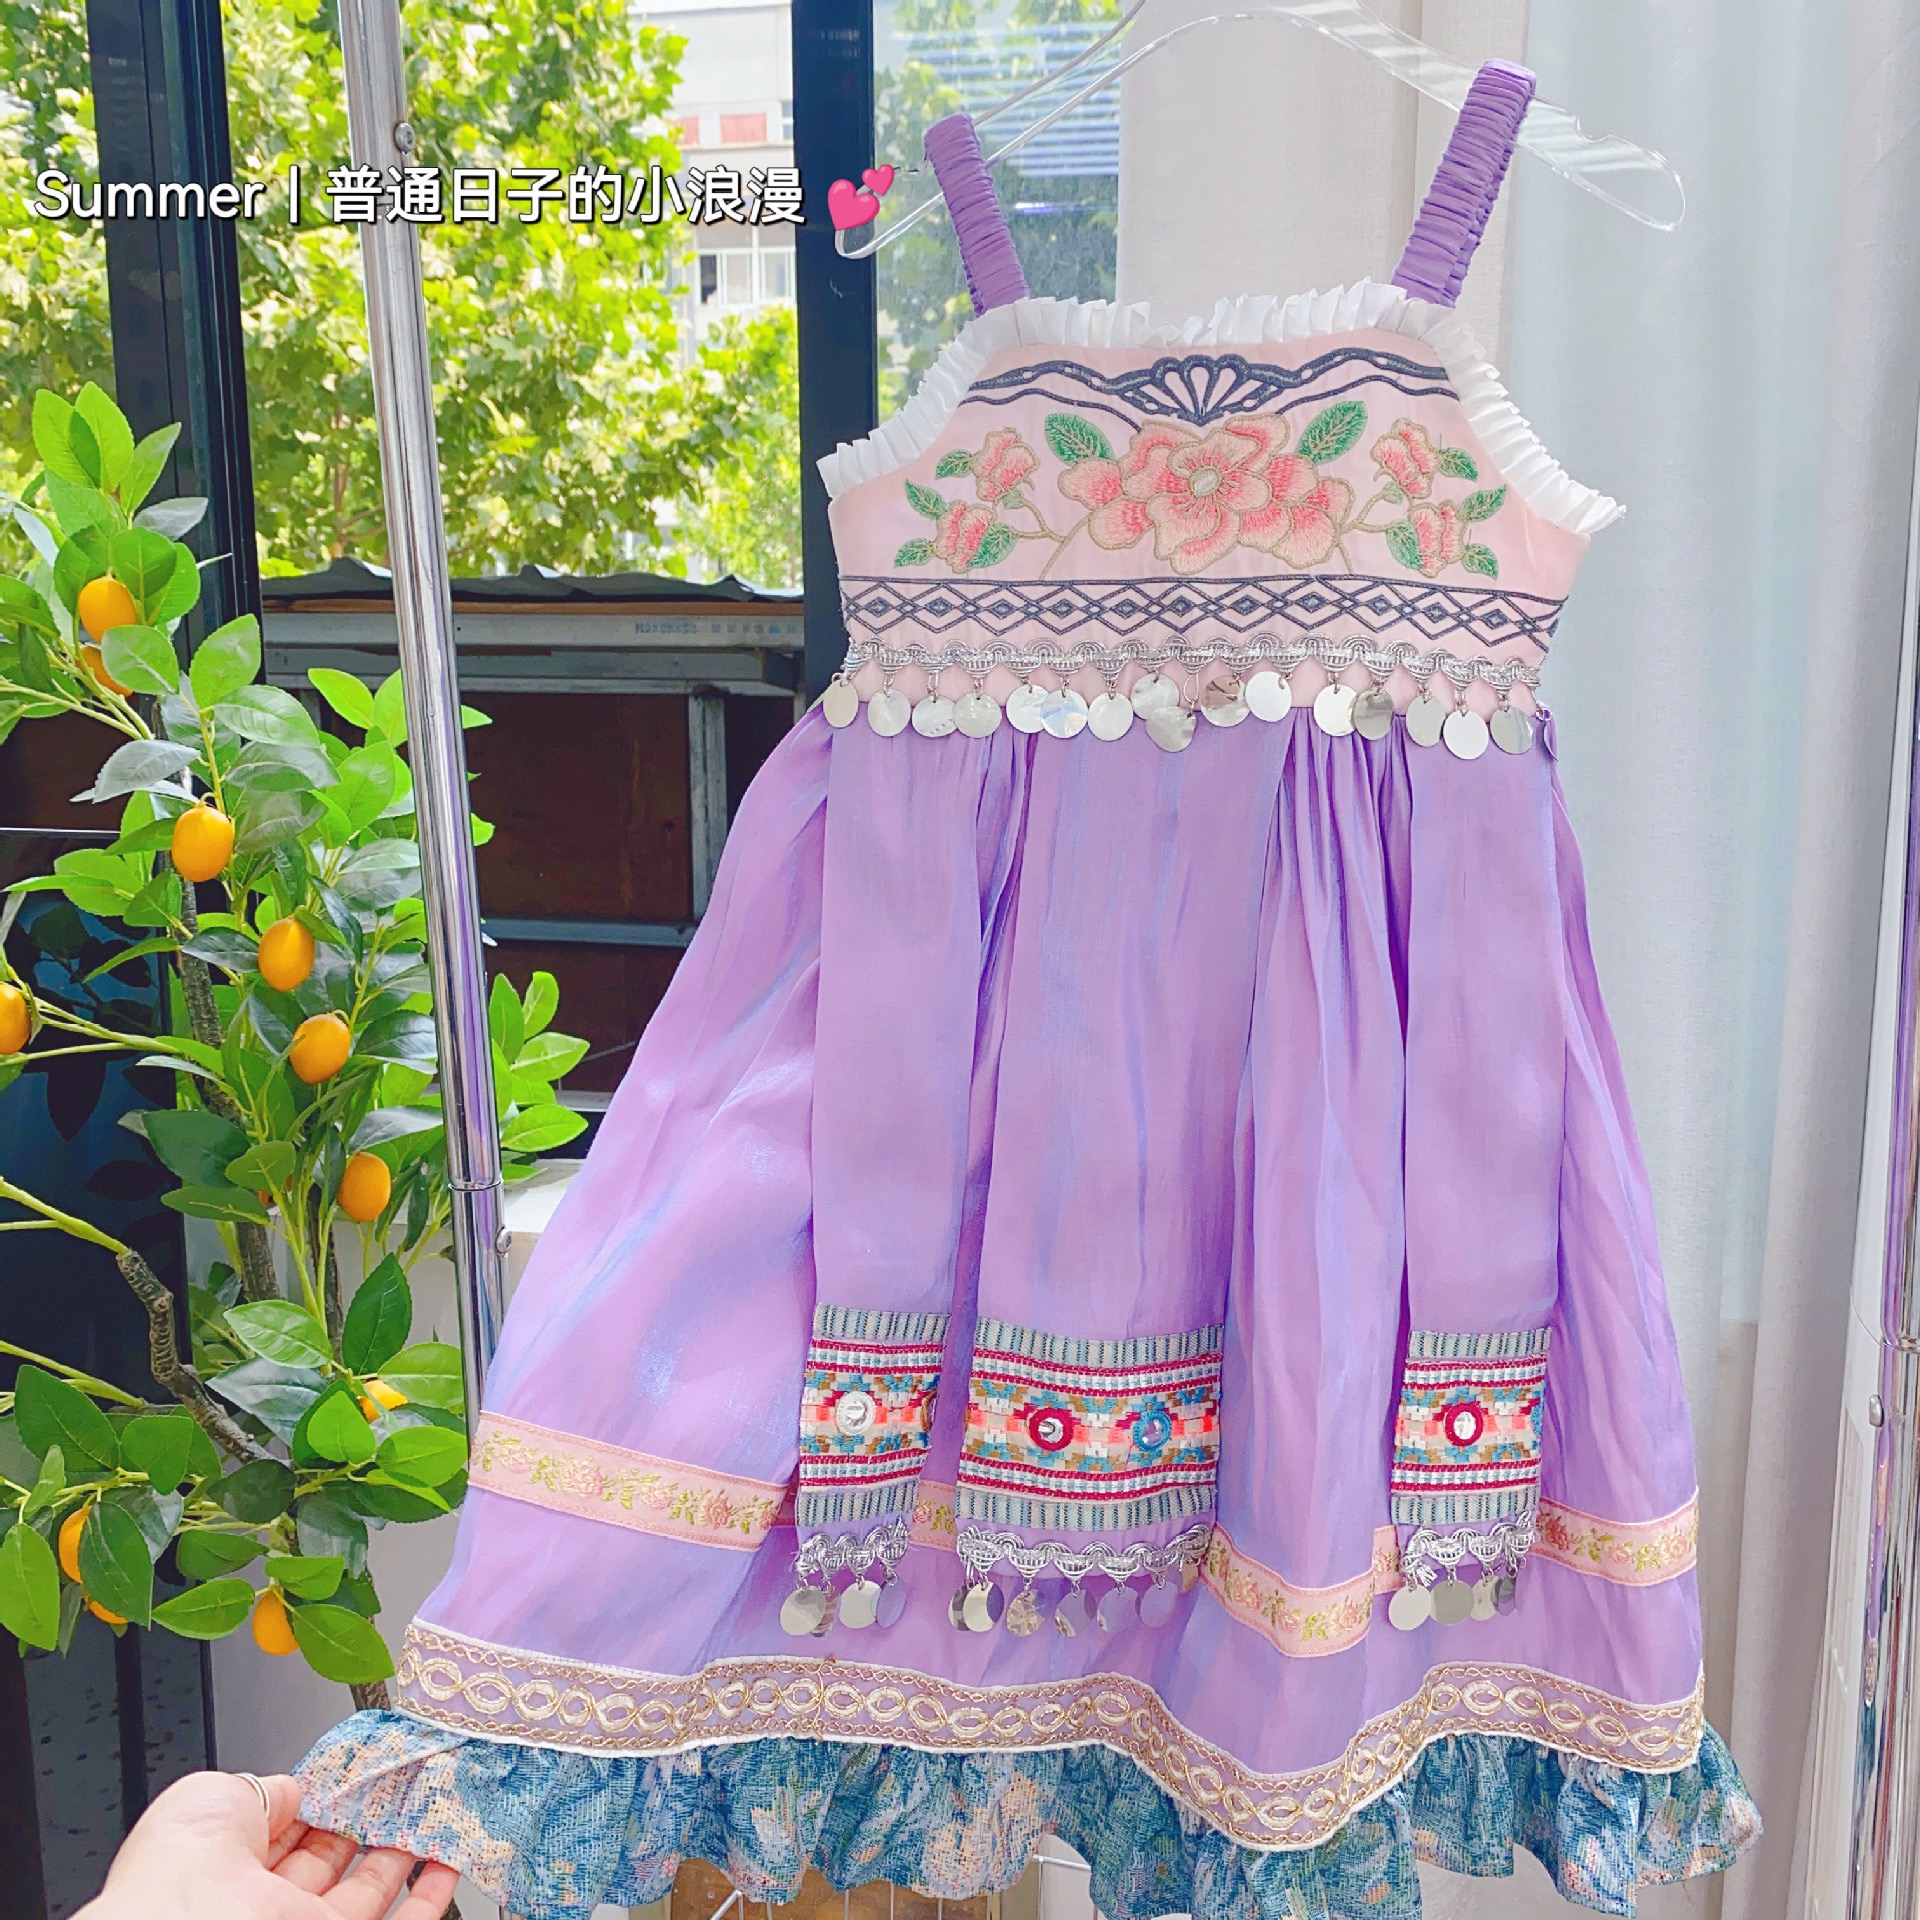 ethic style slip girls dress purple summer children kids' dresses manufacturer sourcing